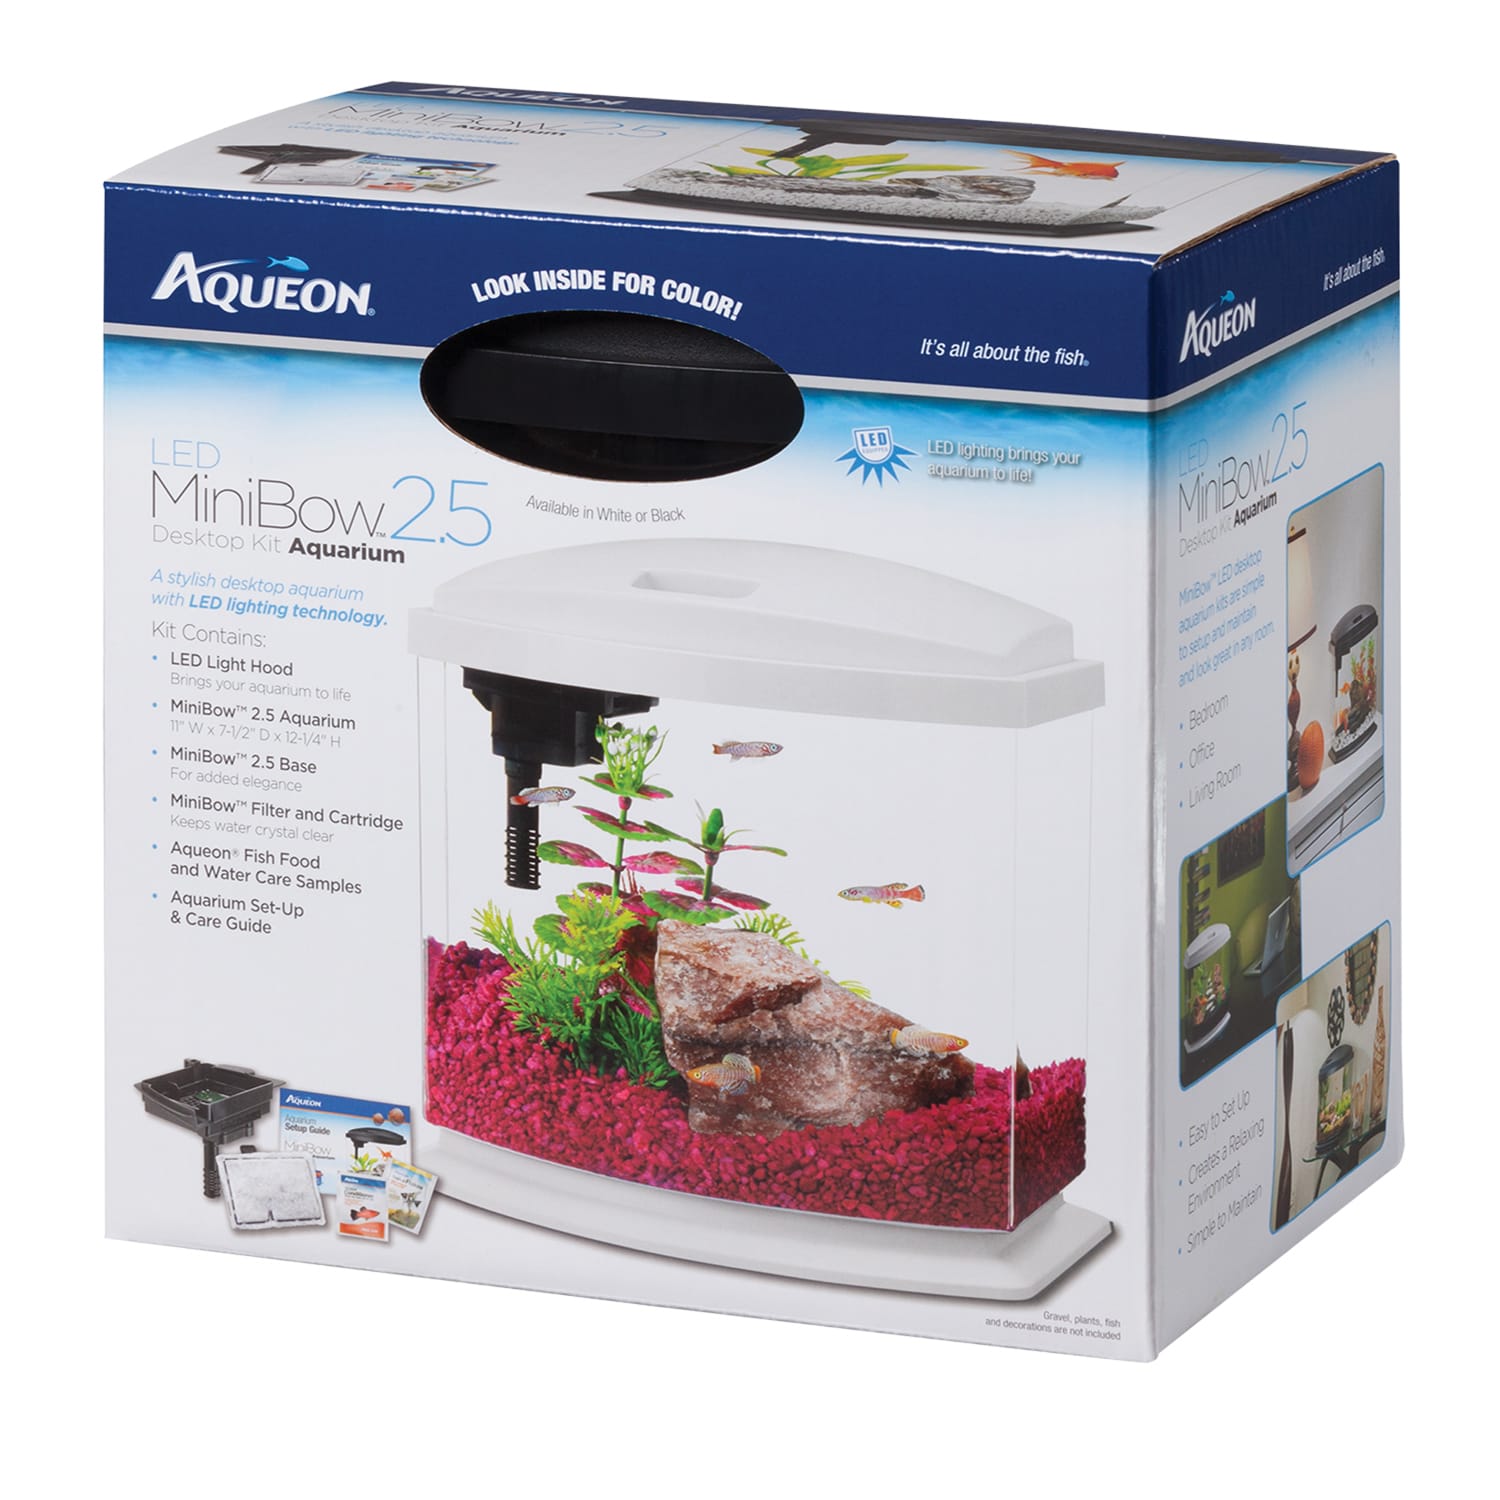 Aqueon 2.5 Gallon MiniBow LED Desktop Fish Aquarium Kit, Black